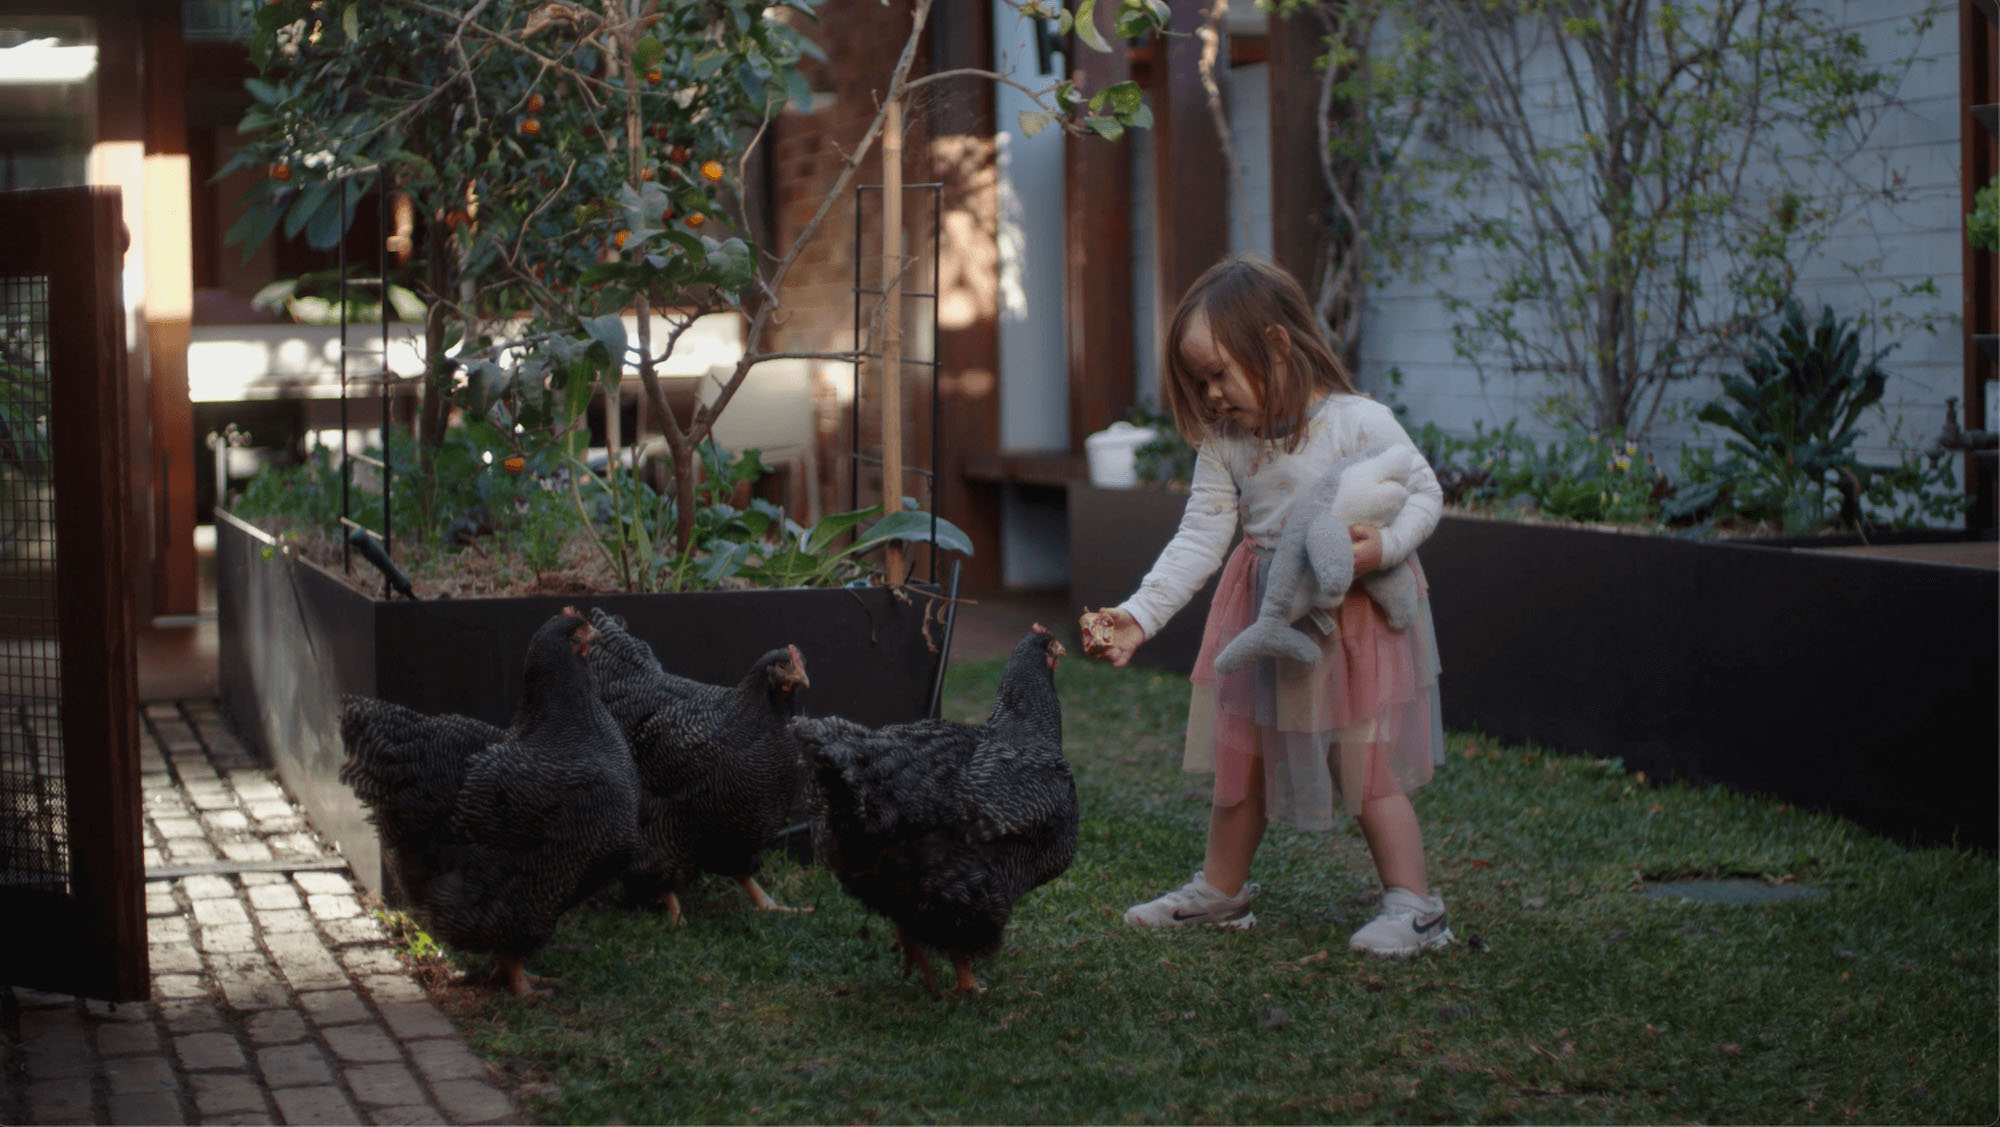 little girl feeding chickens in a garden